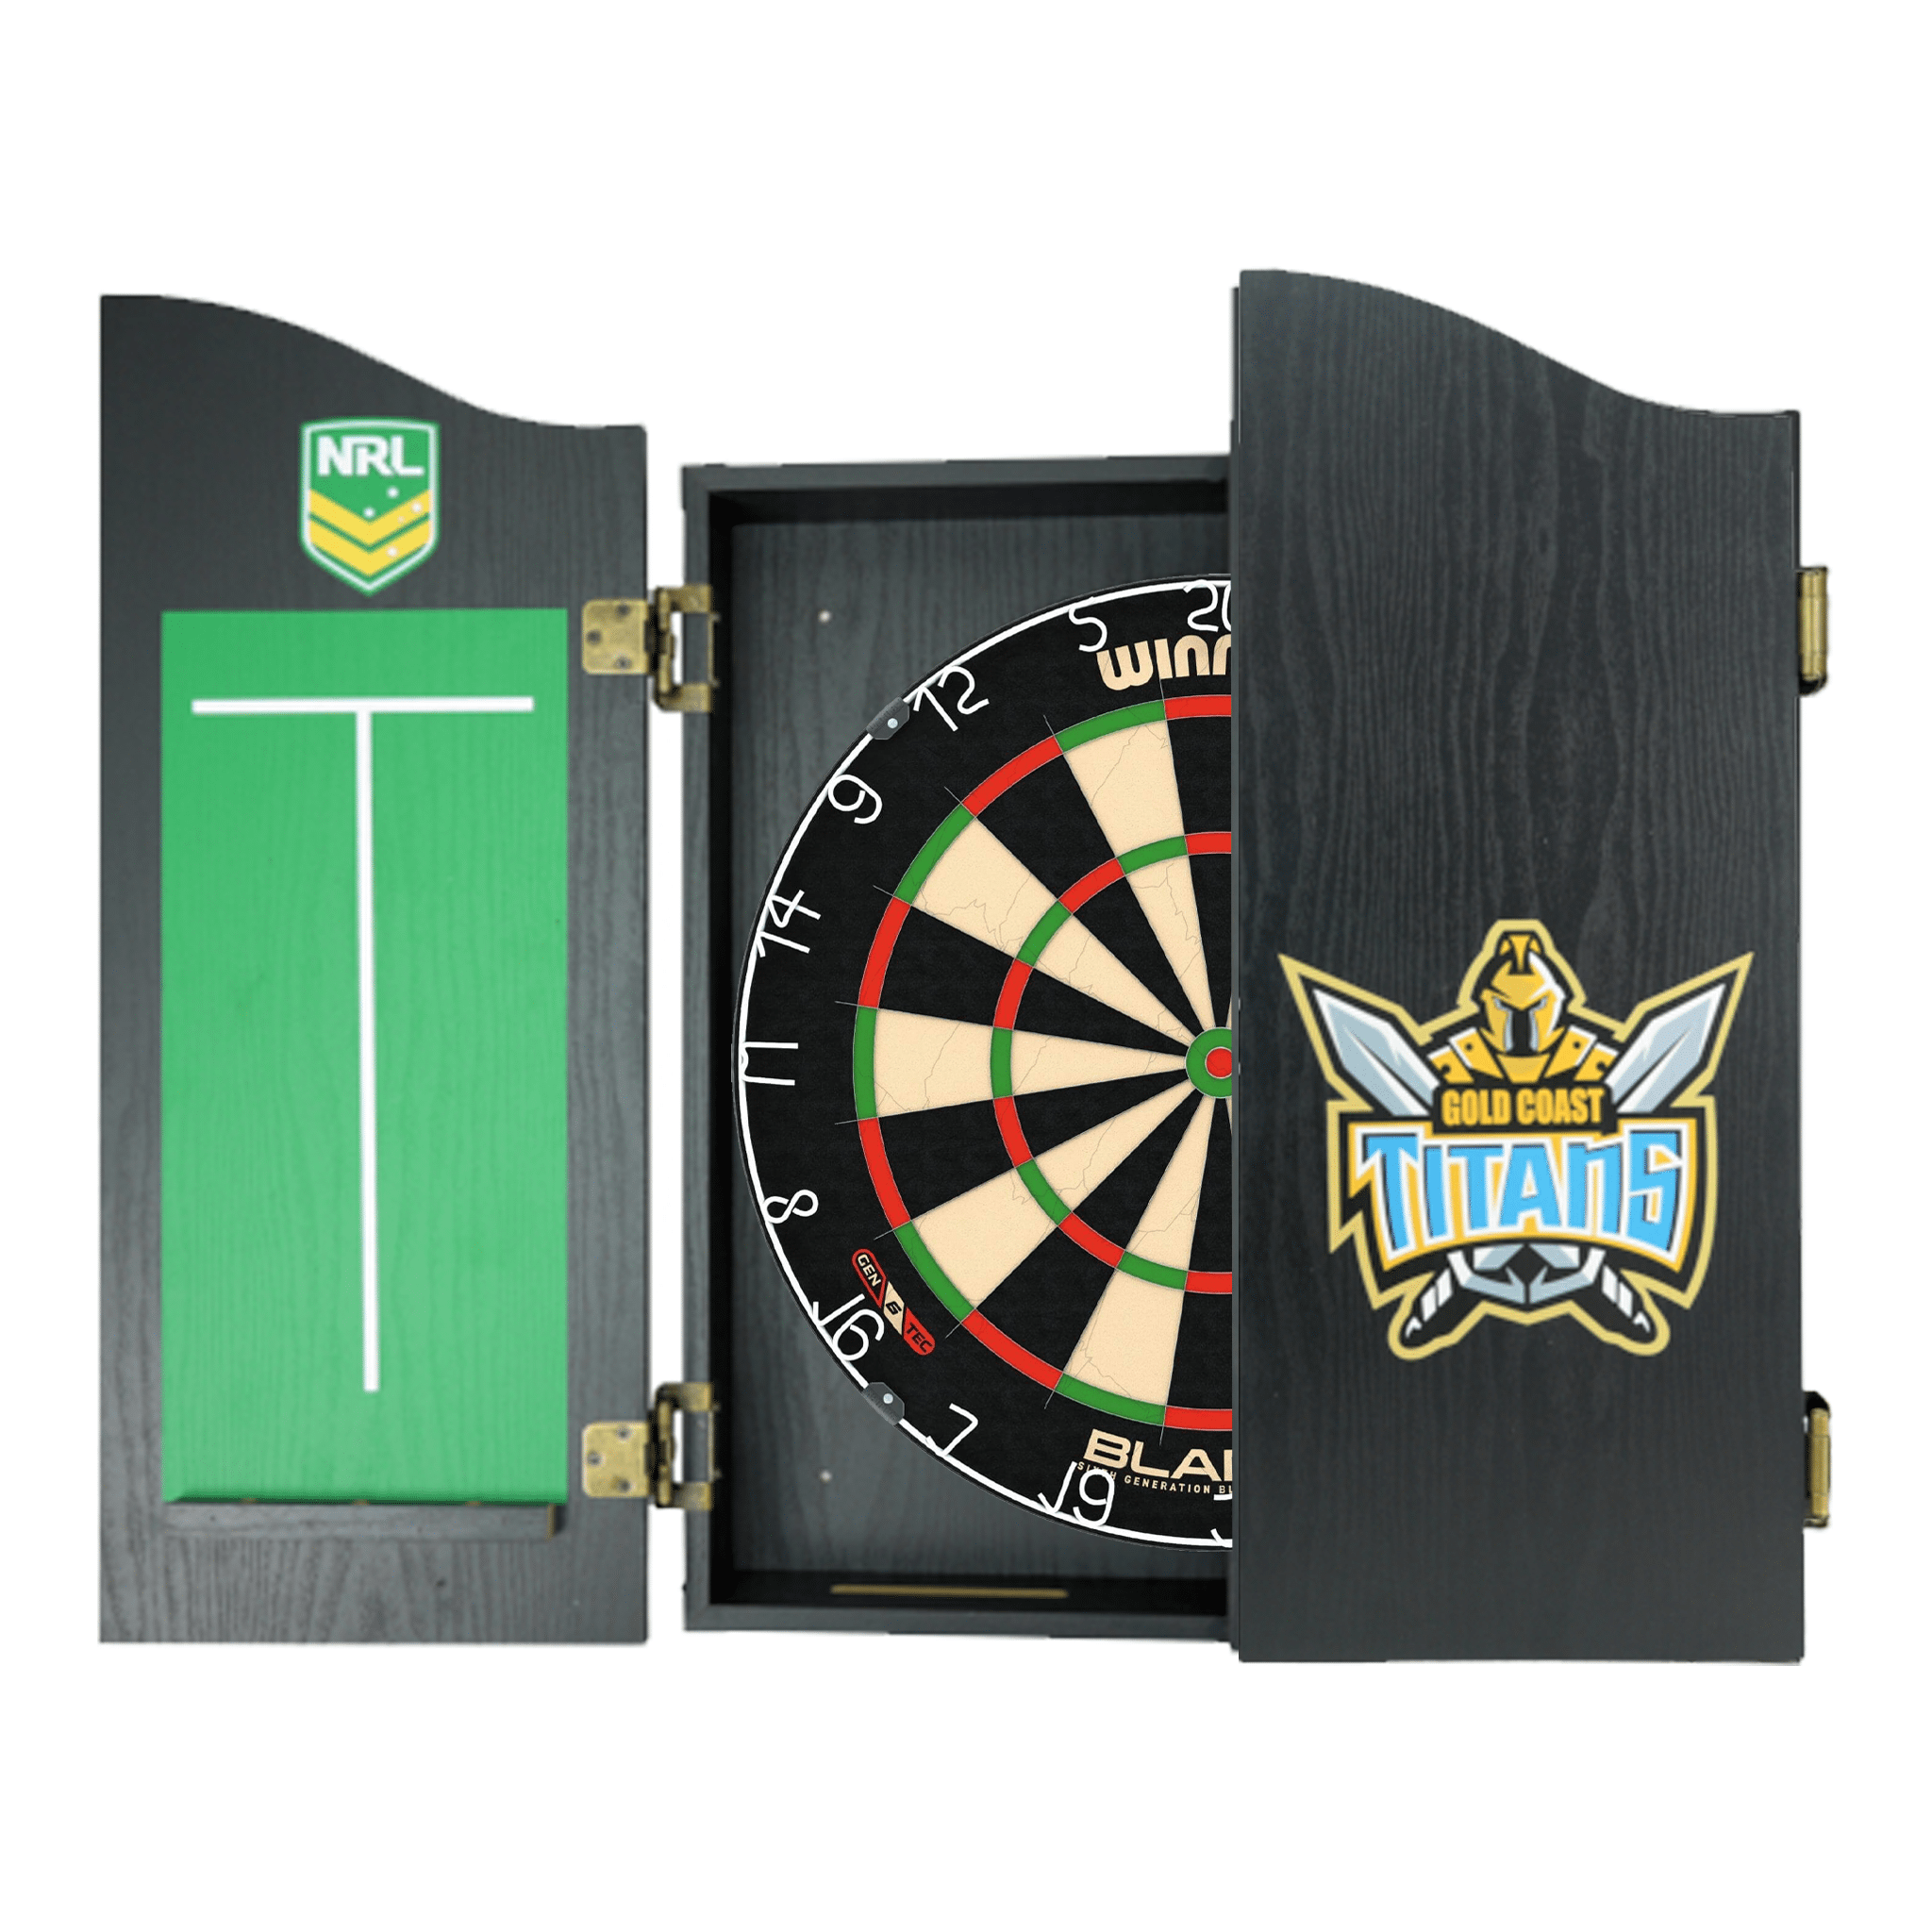 Winmau Blade 6 Dartboard, Official NRL Cabinet & Darts - Complete Darts Set Blade 6 / Gold Coast Titans Boards